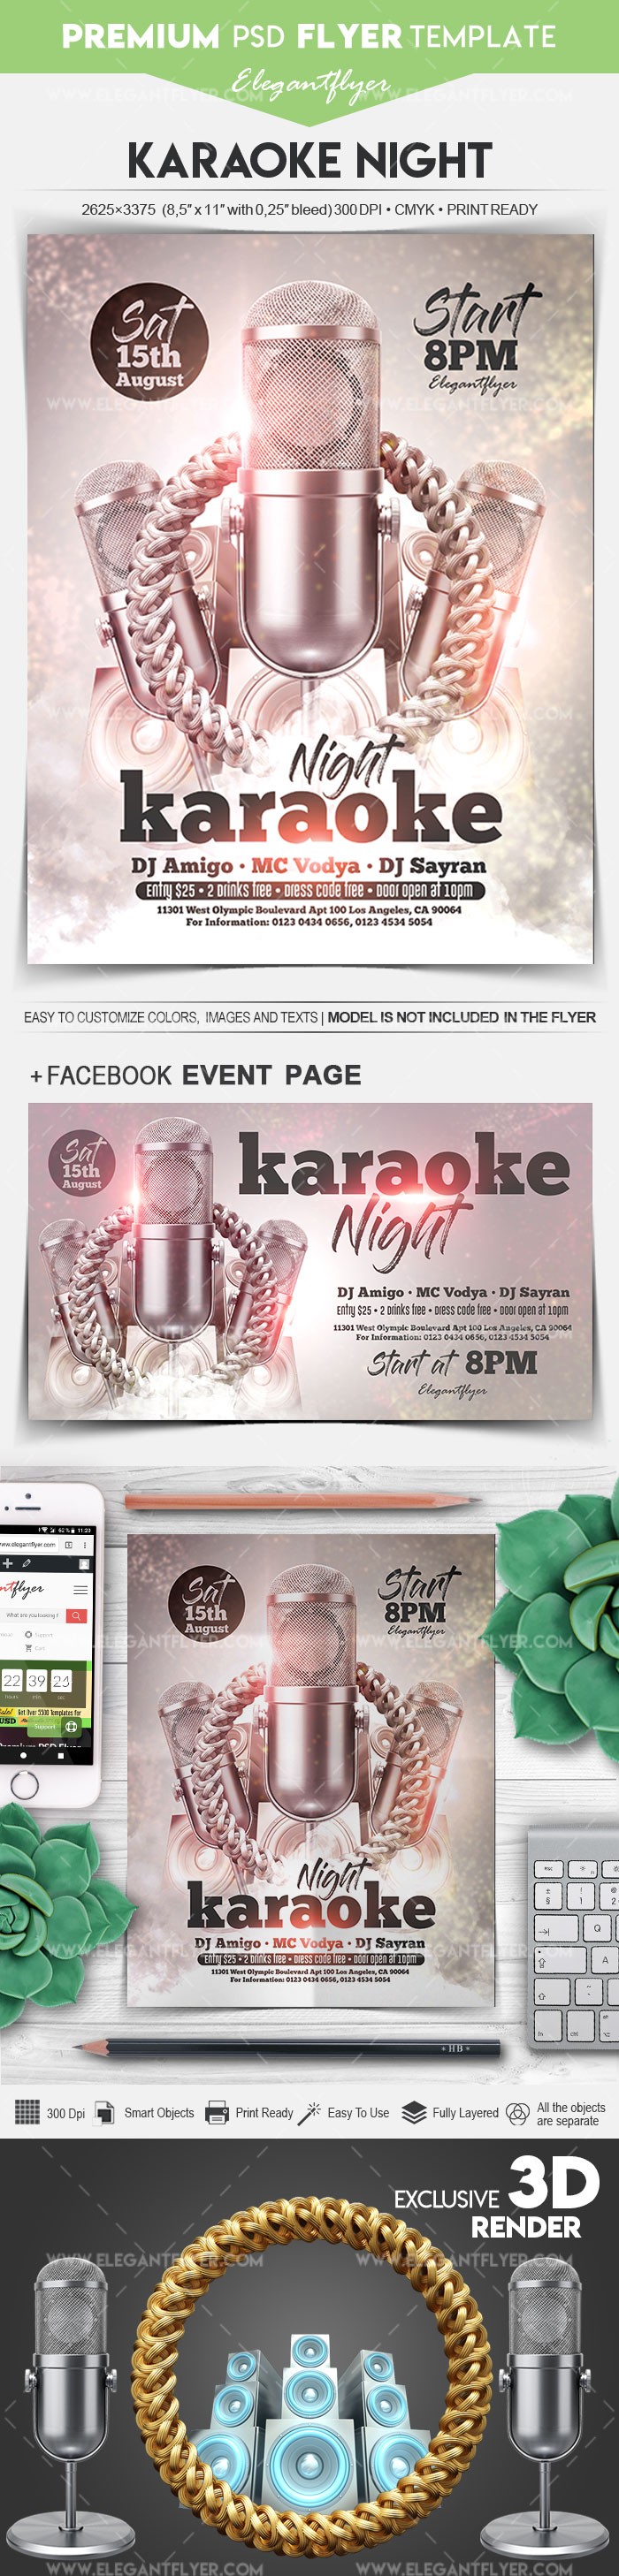 Karaoke Nacht by ElegantFlyer